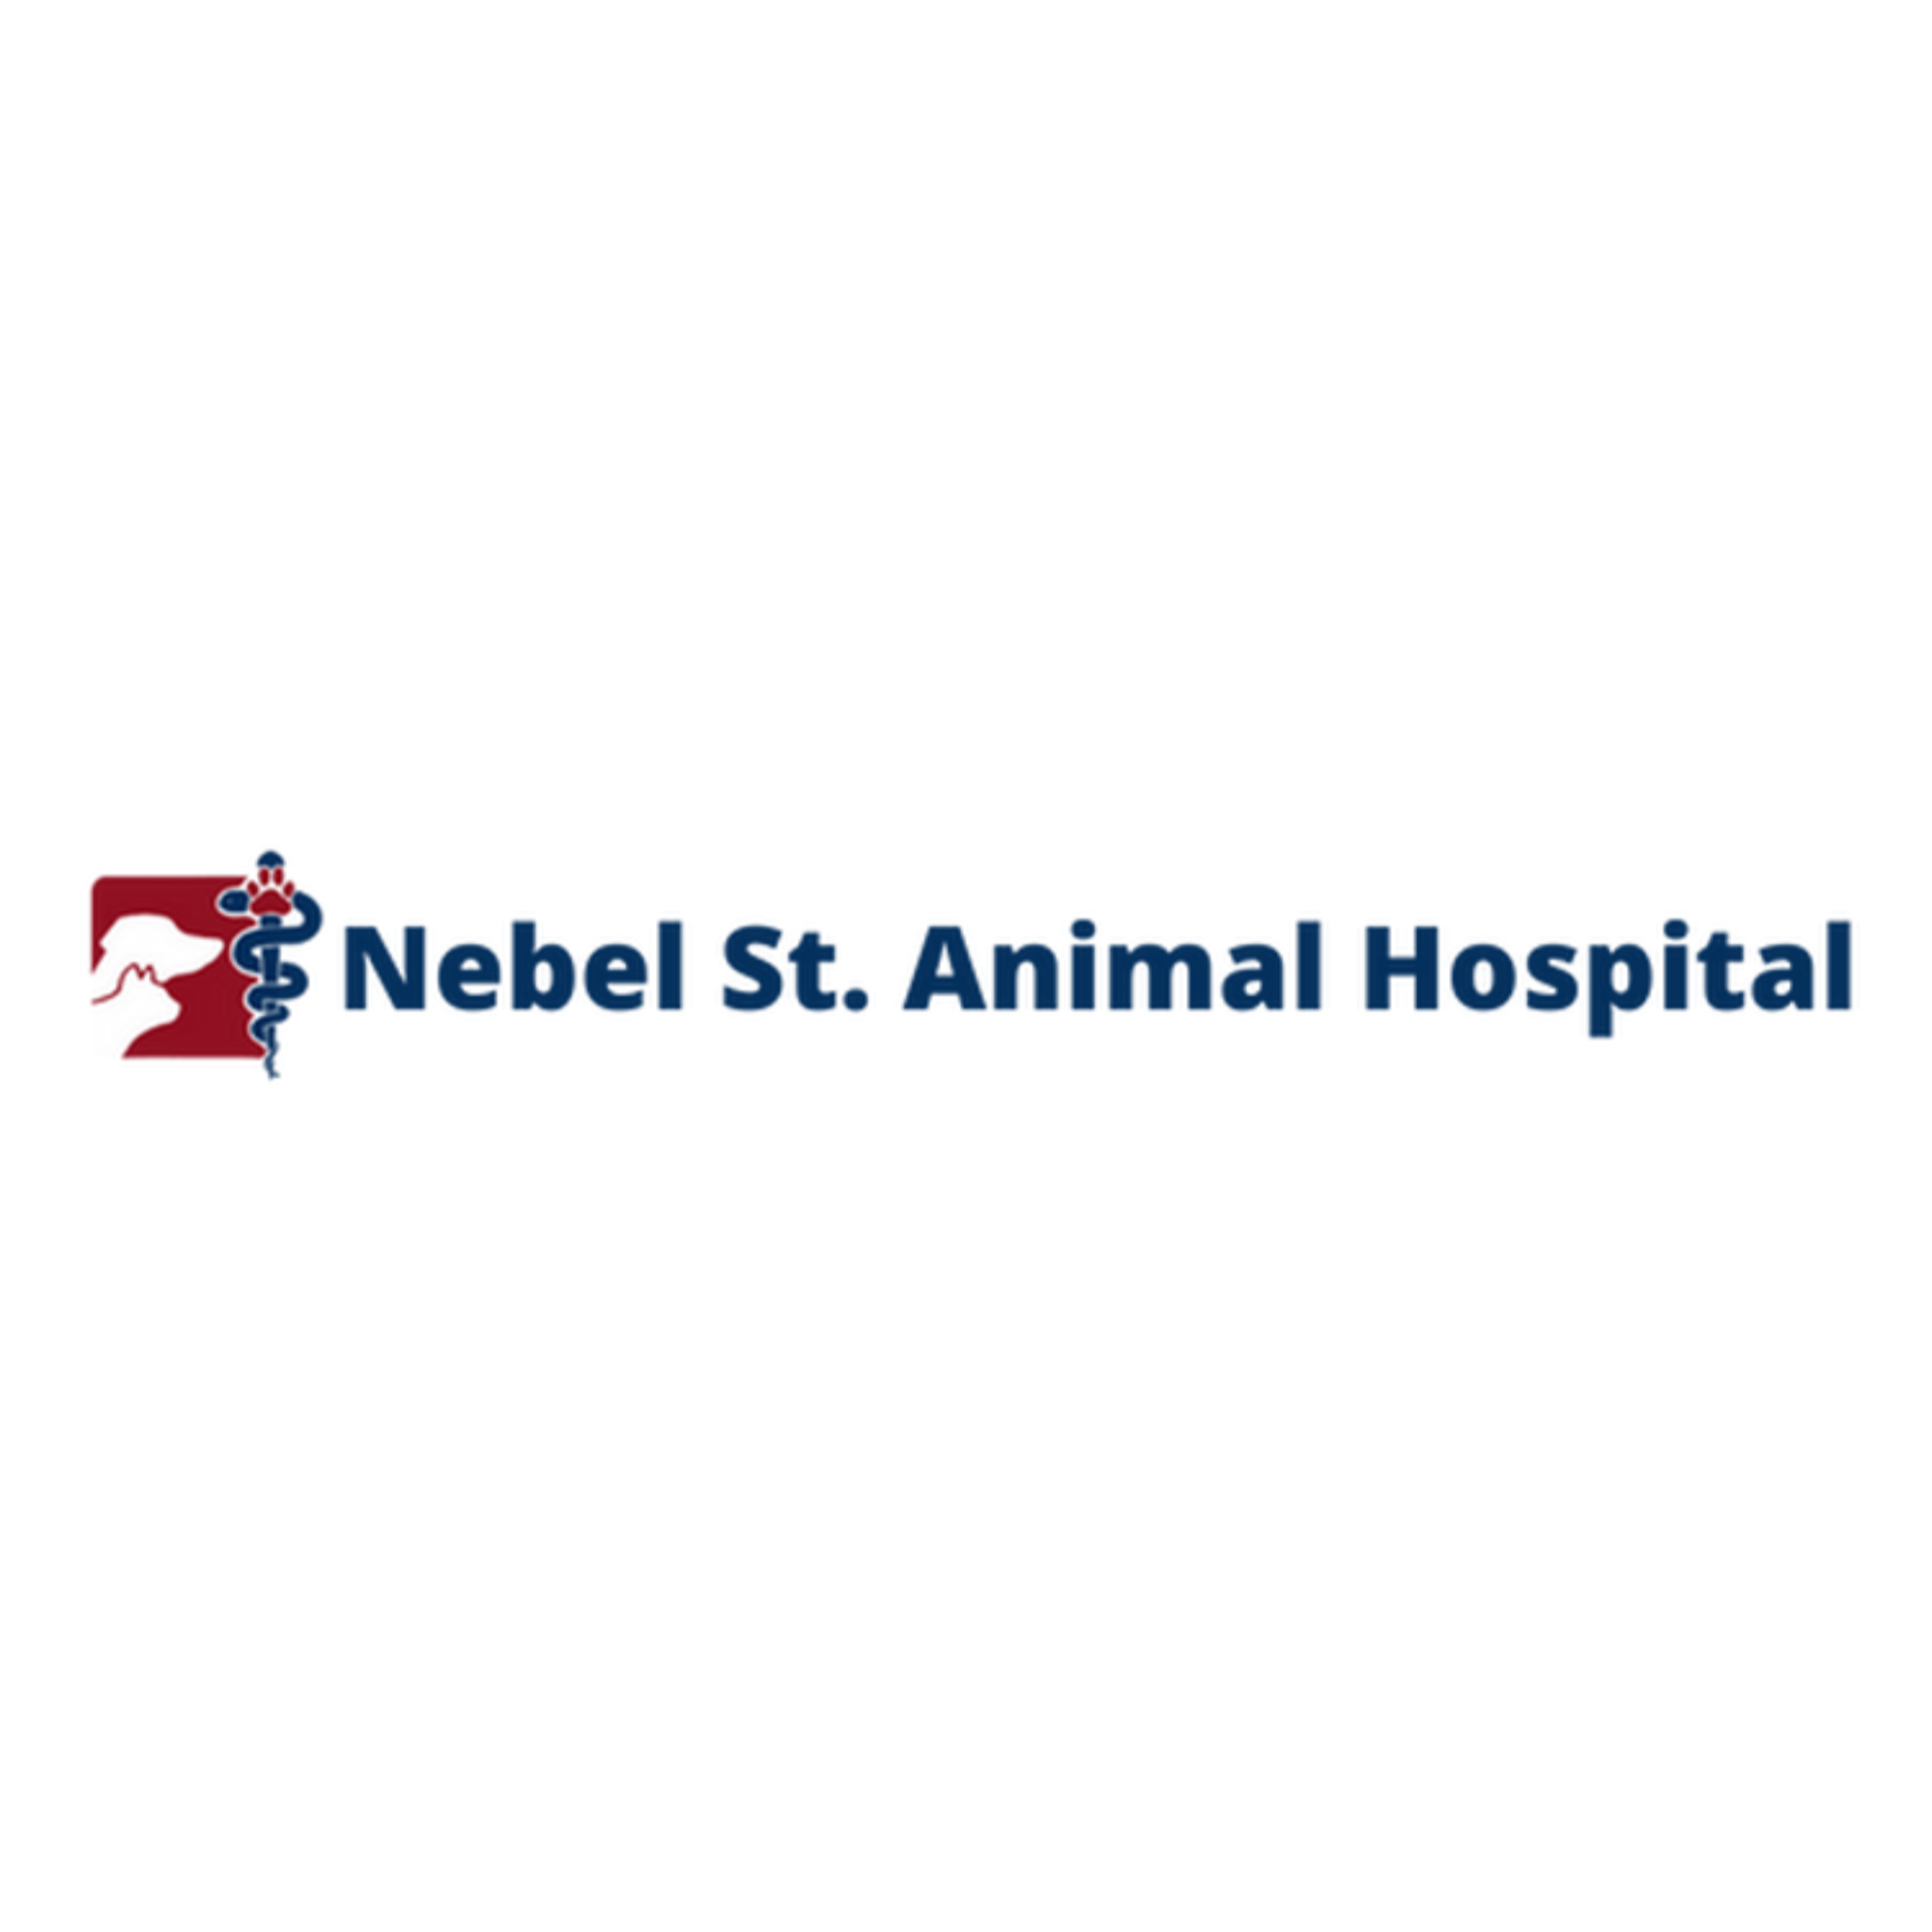 Nebel St. Animal Hospital